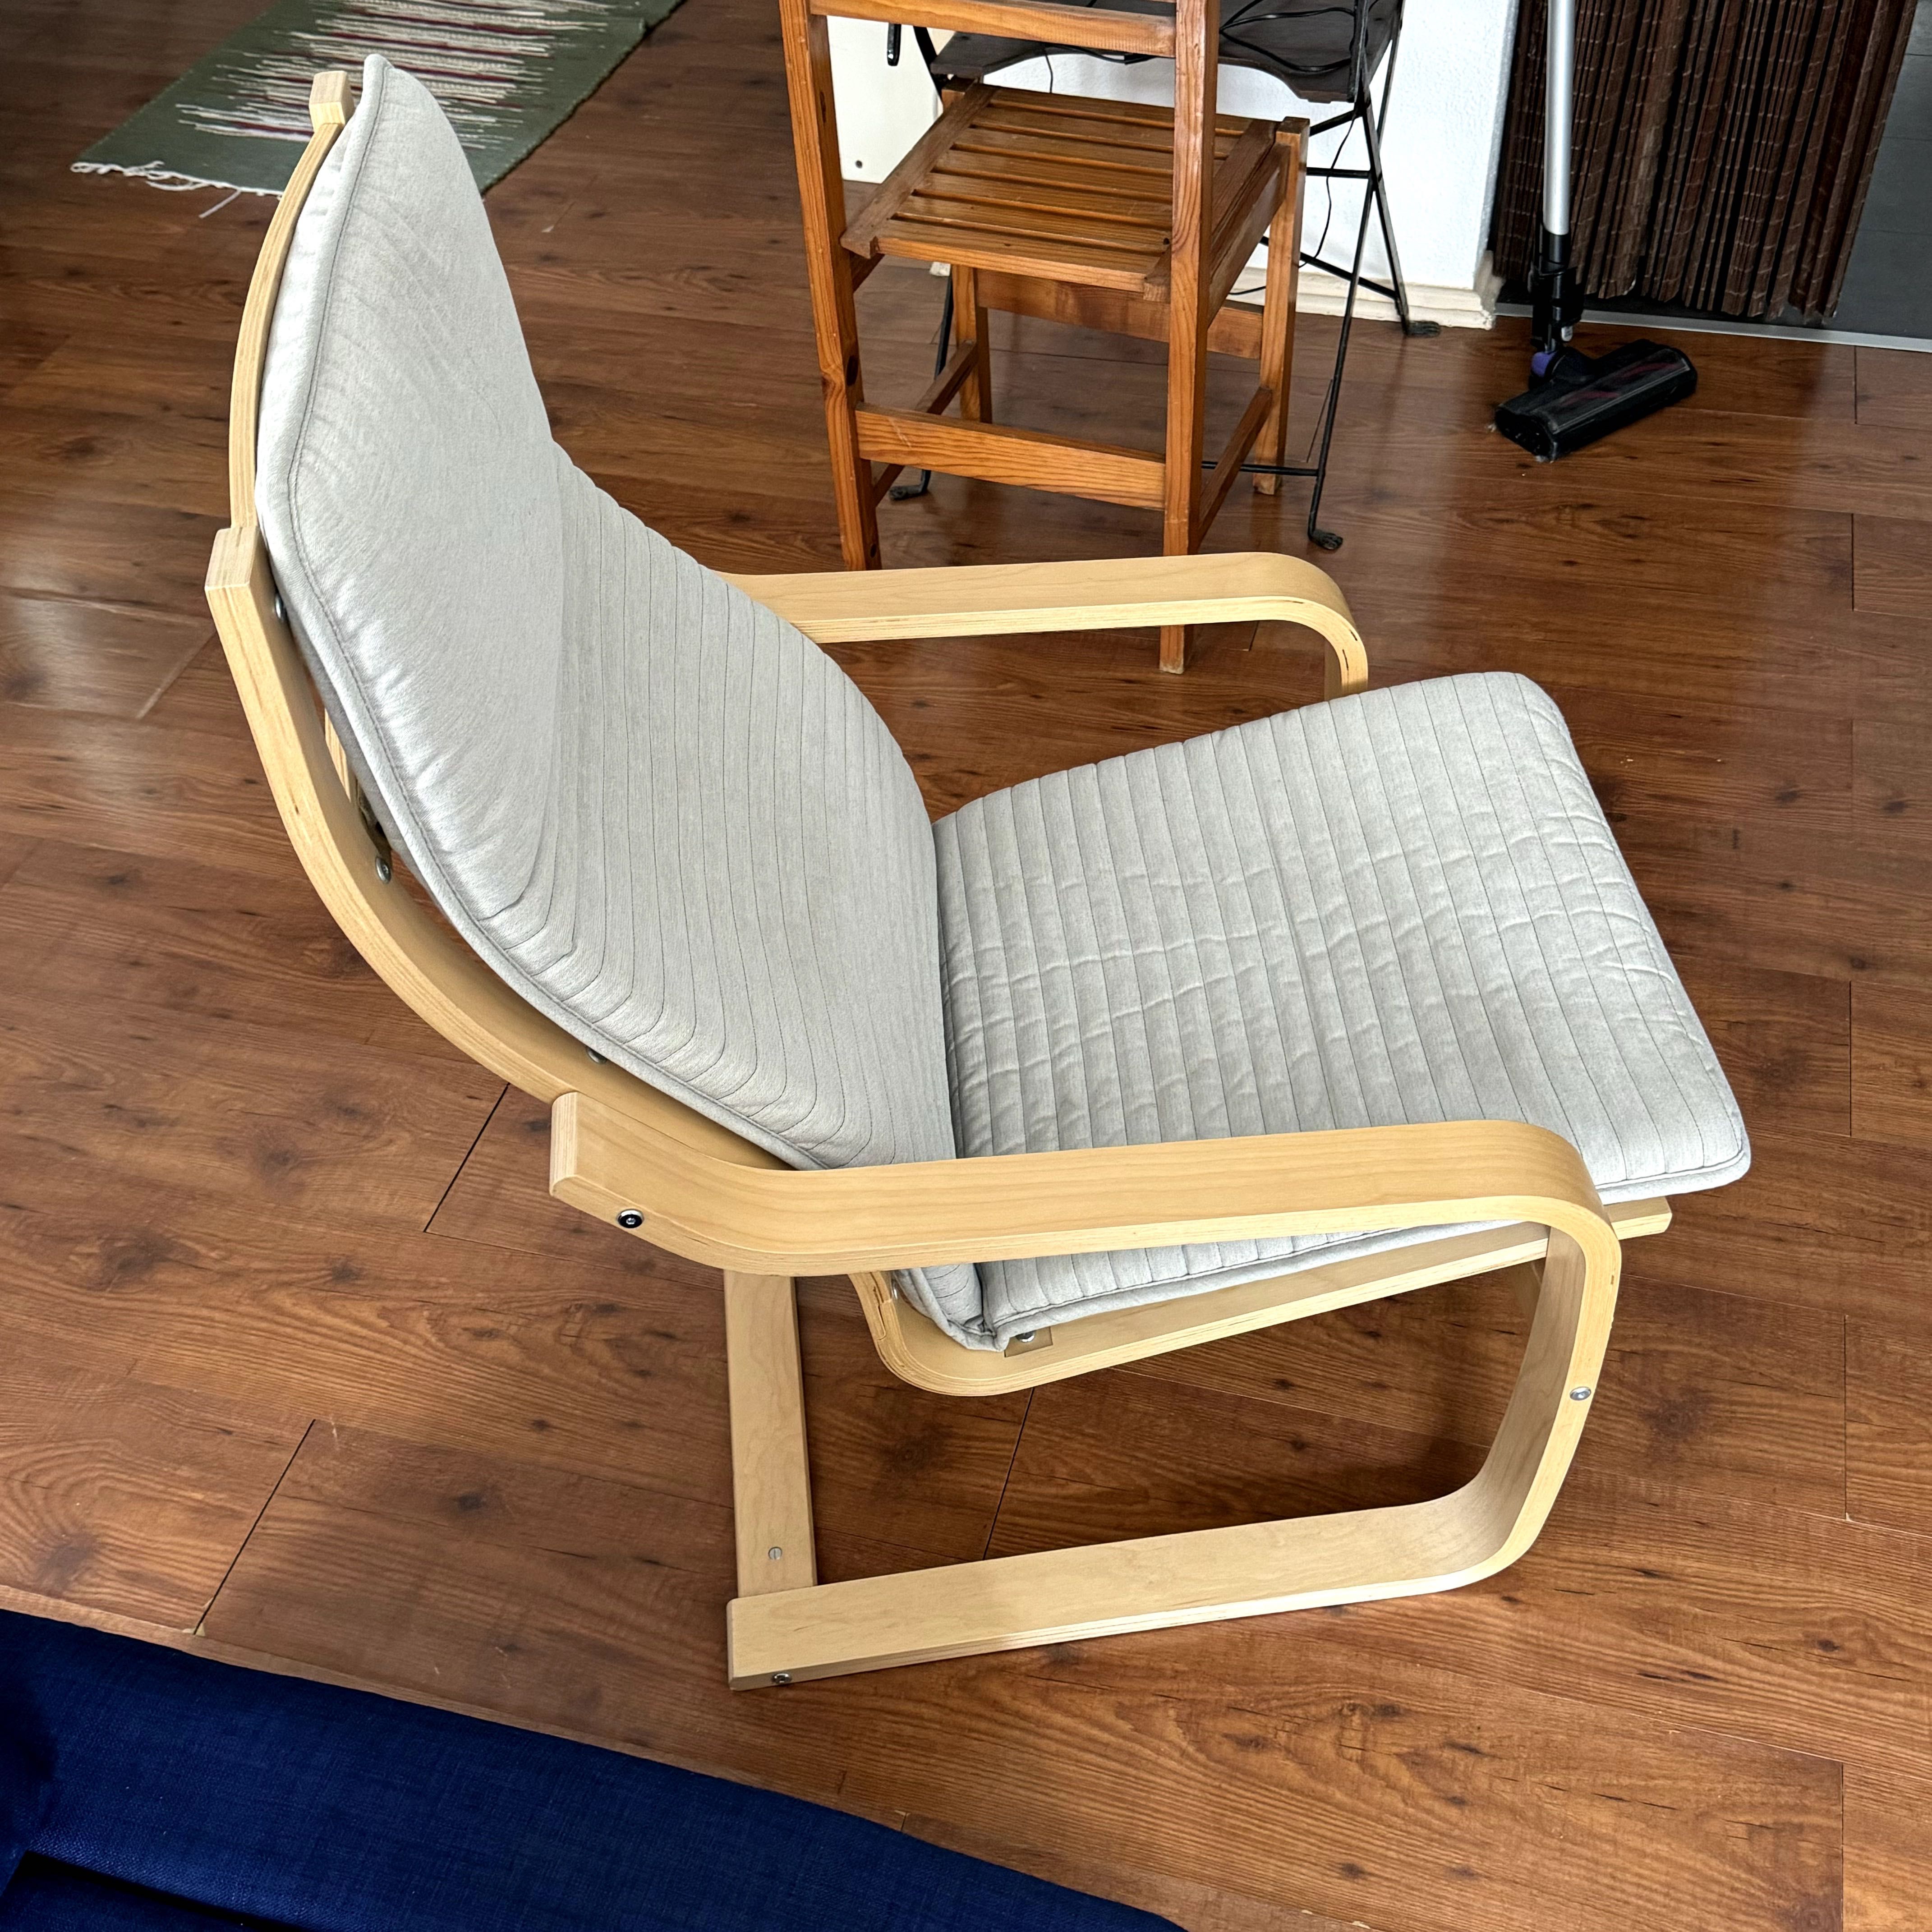 Ikea Poang chair